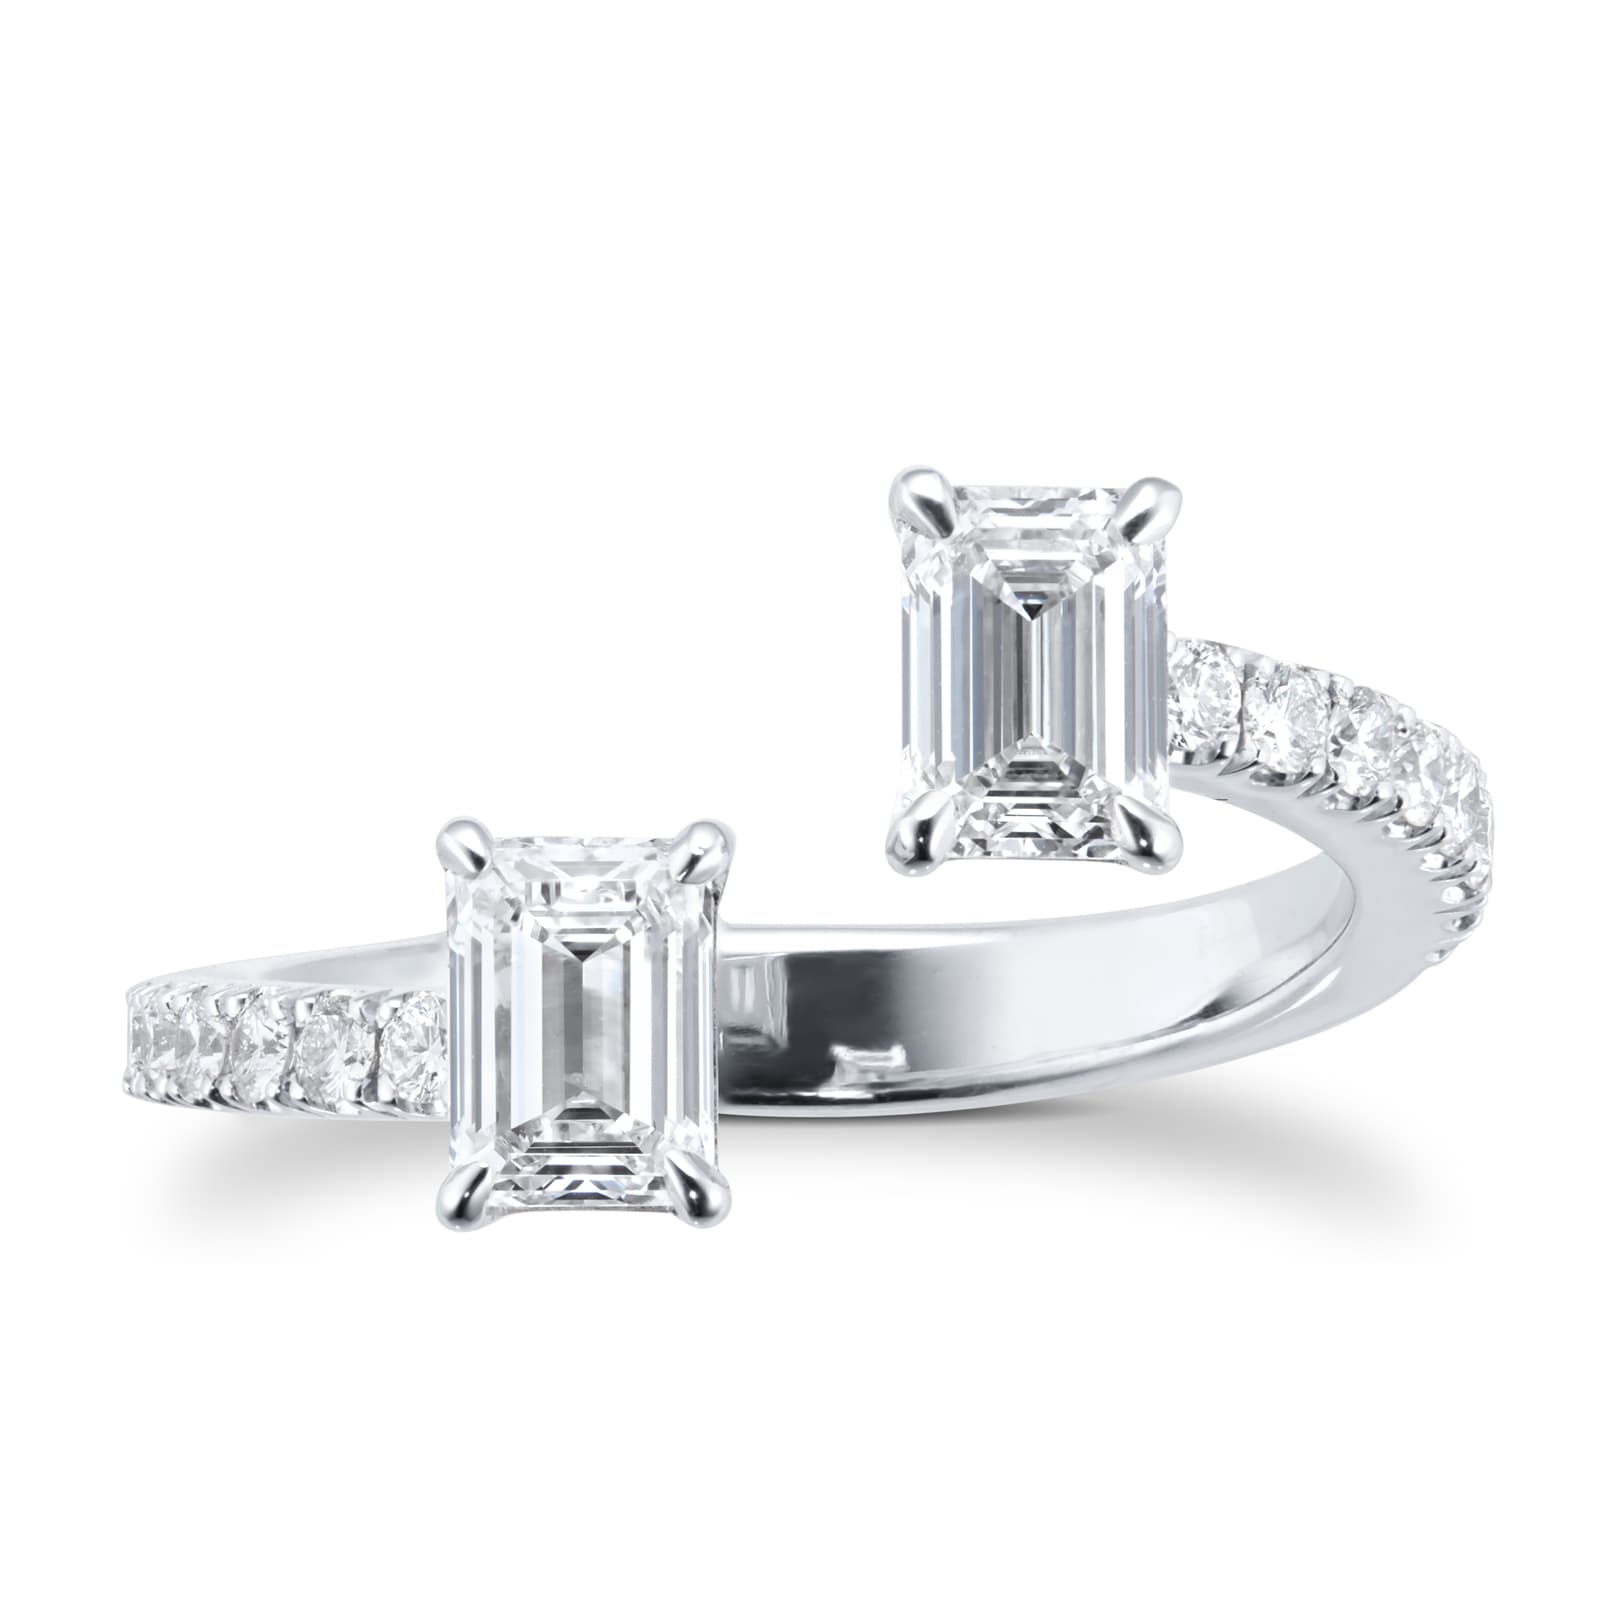 Platinum Tois Et Moi 1.20cttw Emerald Cut Ring With Diamond Set Shoulders - Ring Size M